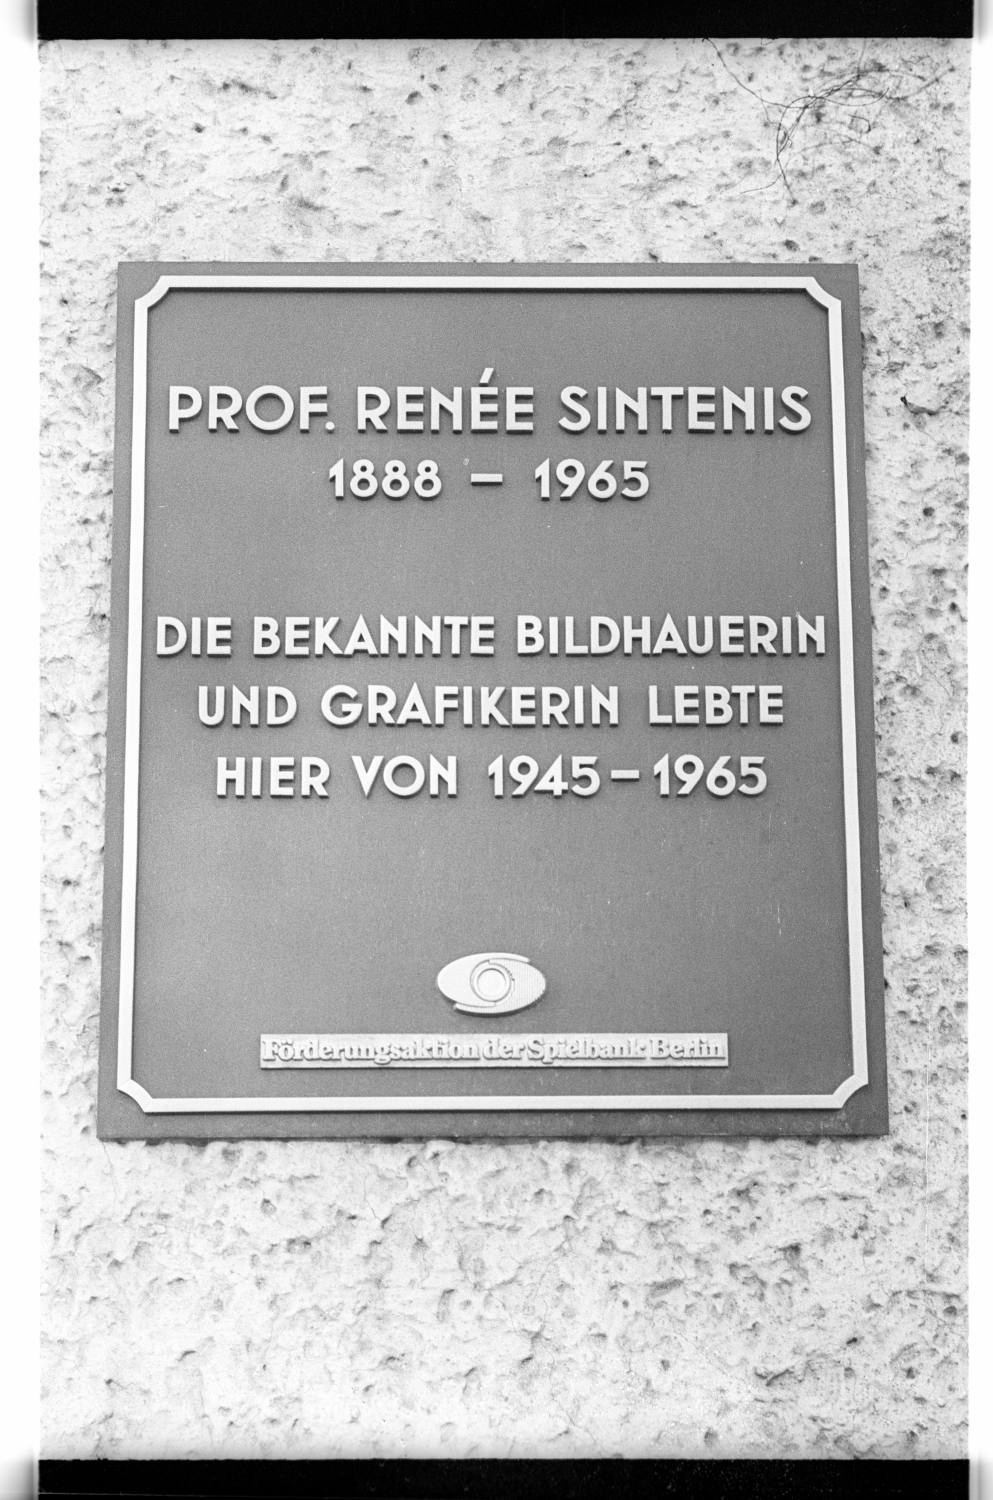 Kleinbildnegative: Gedenktafel, Reneé Sintenis, 1978 (Museen Tempelhof-Schöneberg/Jürgen Henschel RR-F)